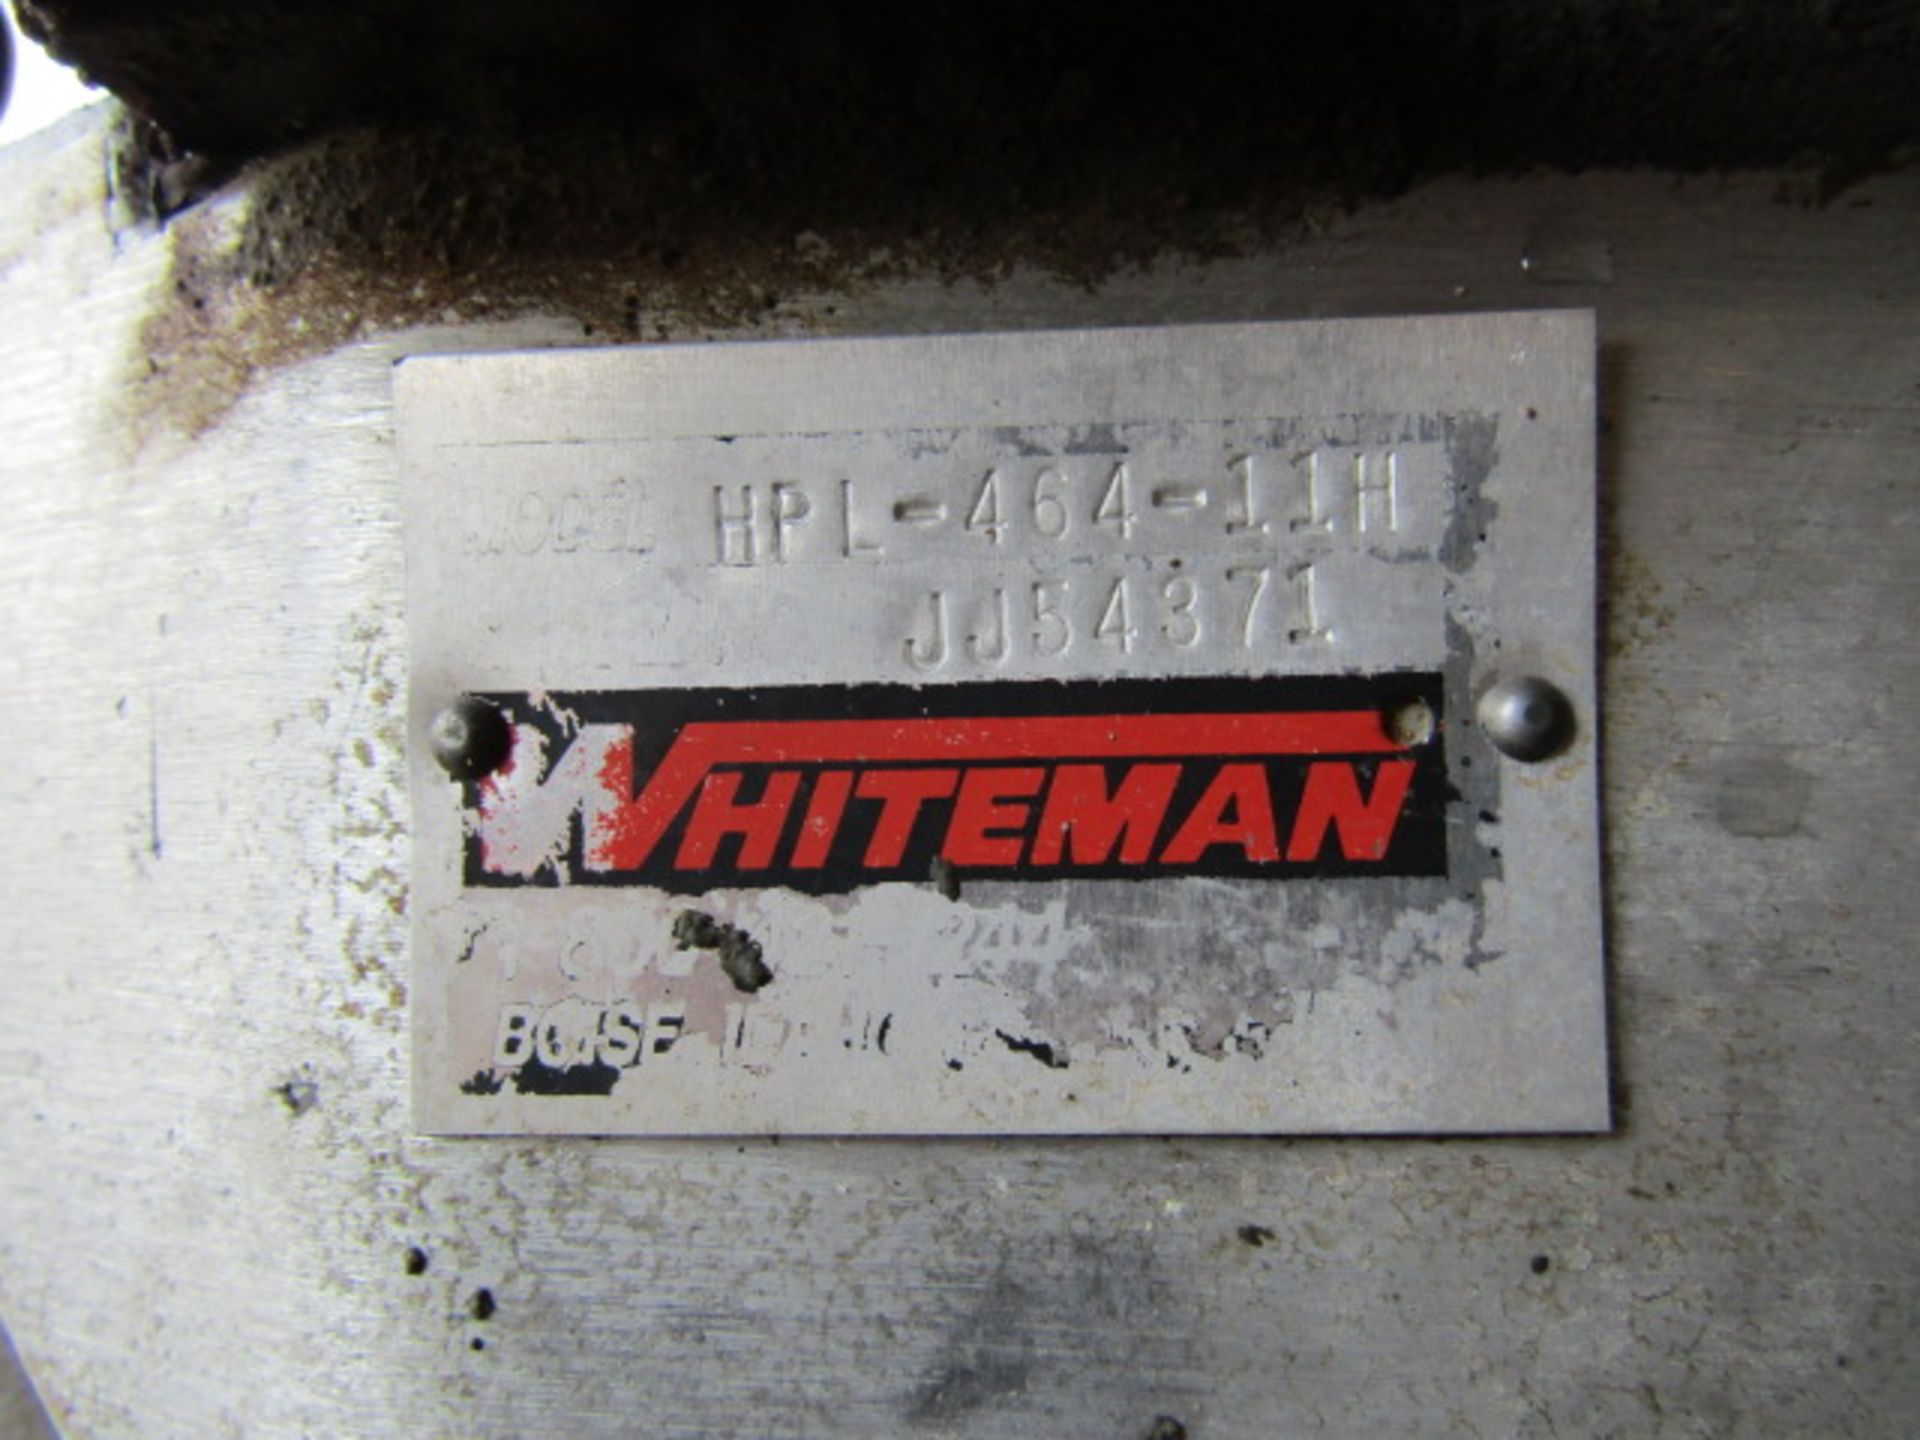 Whiteman Power Trowel, Model HPL-464-11H, Serial #JJ54371, GX340 Honda 11 hp Motor, - Image 3 of 5